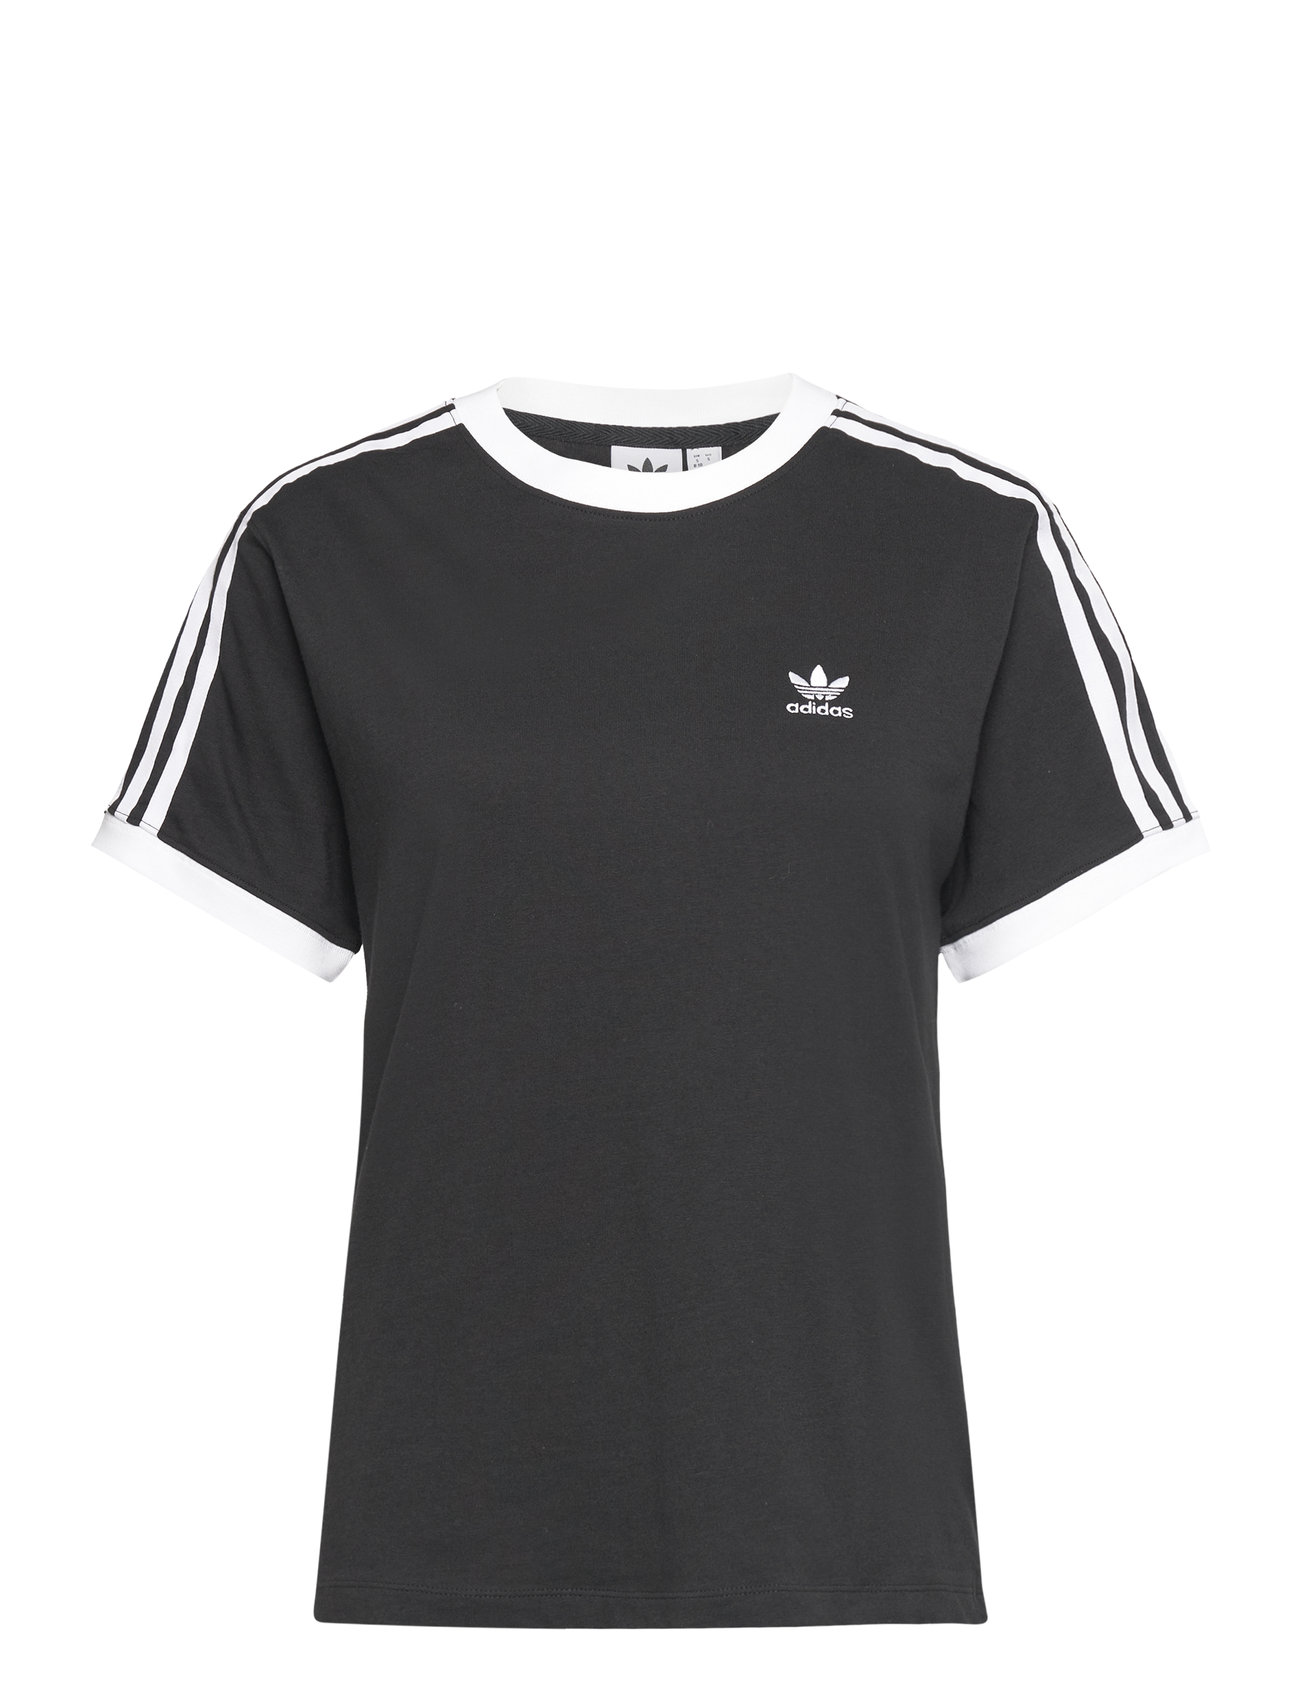 3 Stripes Tee Sport T-shirts & Tops Short-sleeved Black Adidas Originals